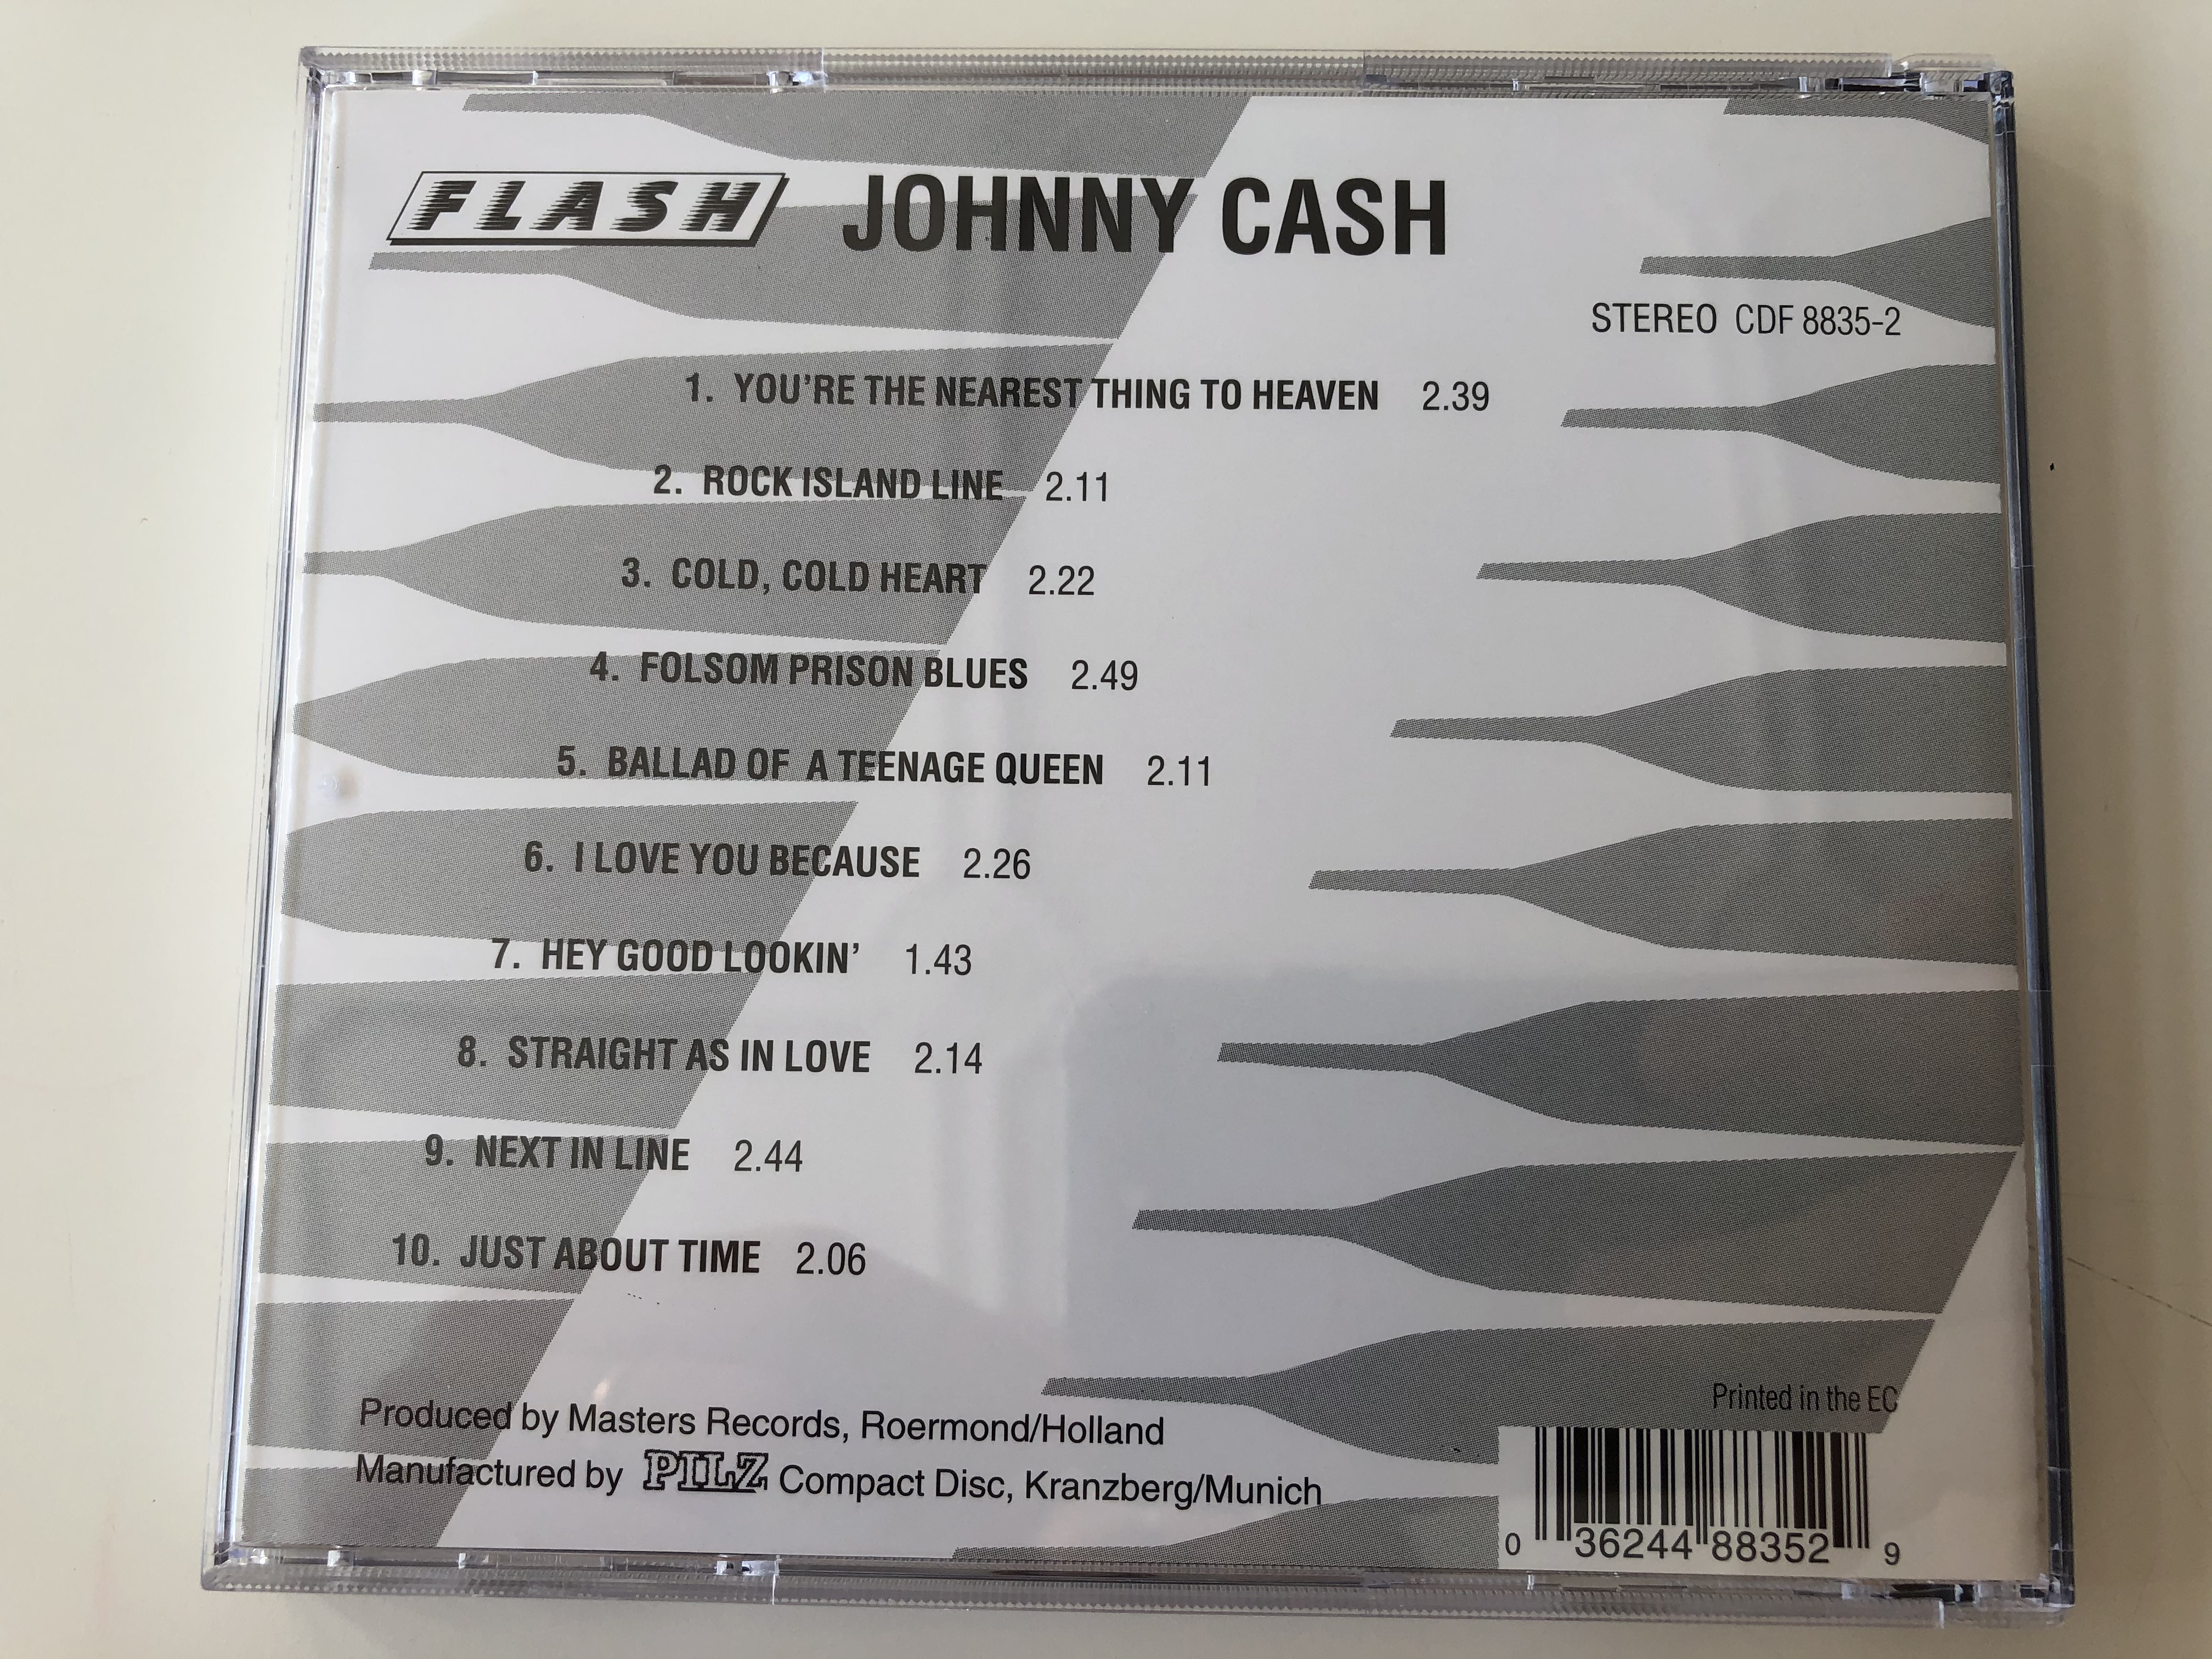 johnny-cash-folsom-prison-blues-rock-island-line-hey-good-lookin-and-many-more-flash-audio-cd-stereo-cdf-8835-2-3-.jpg